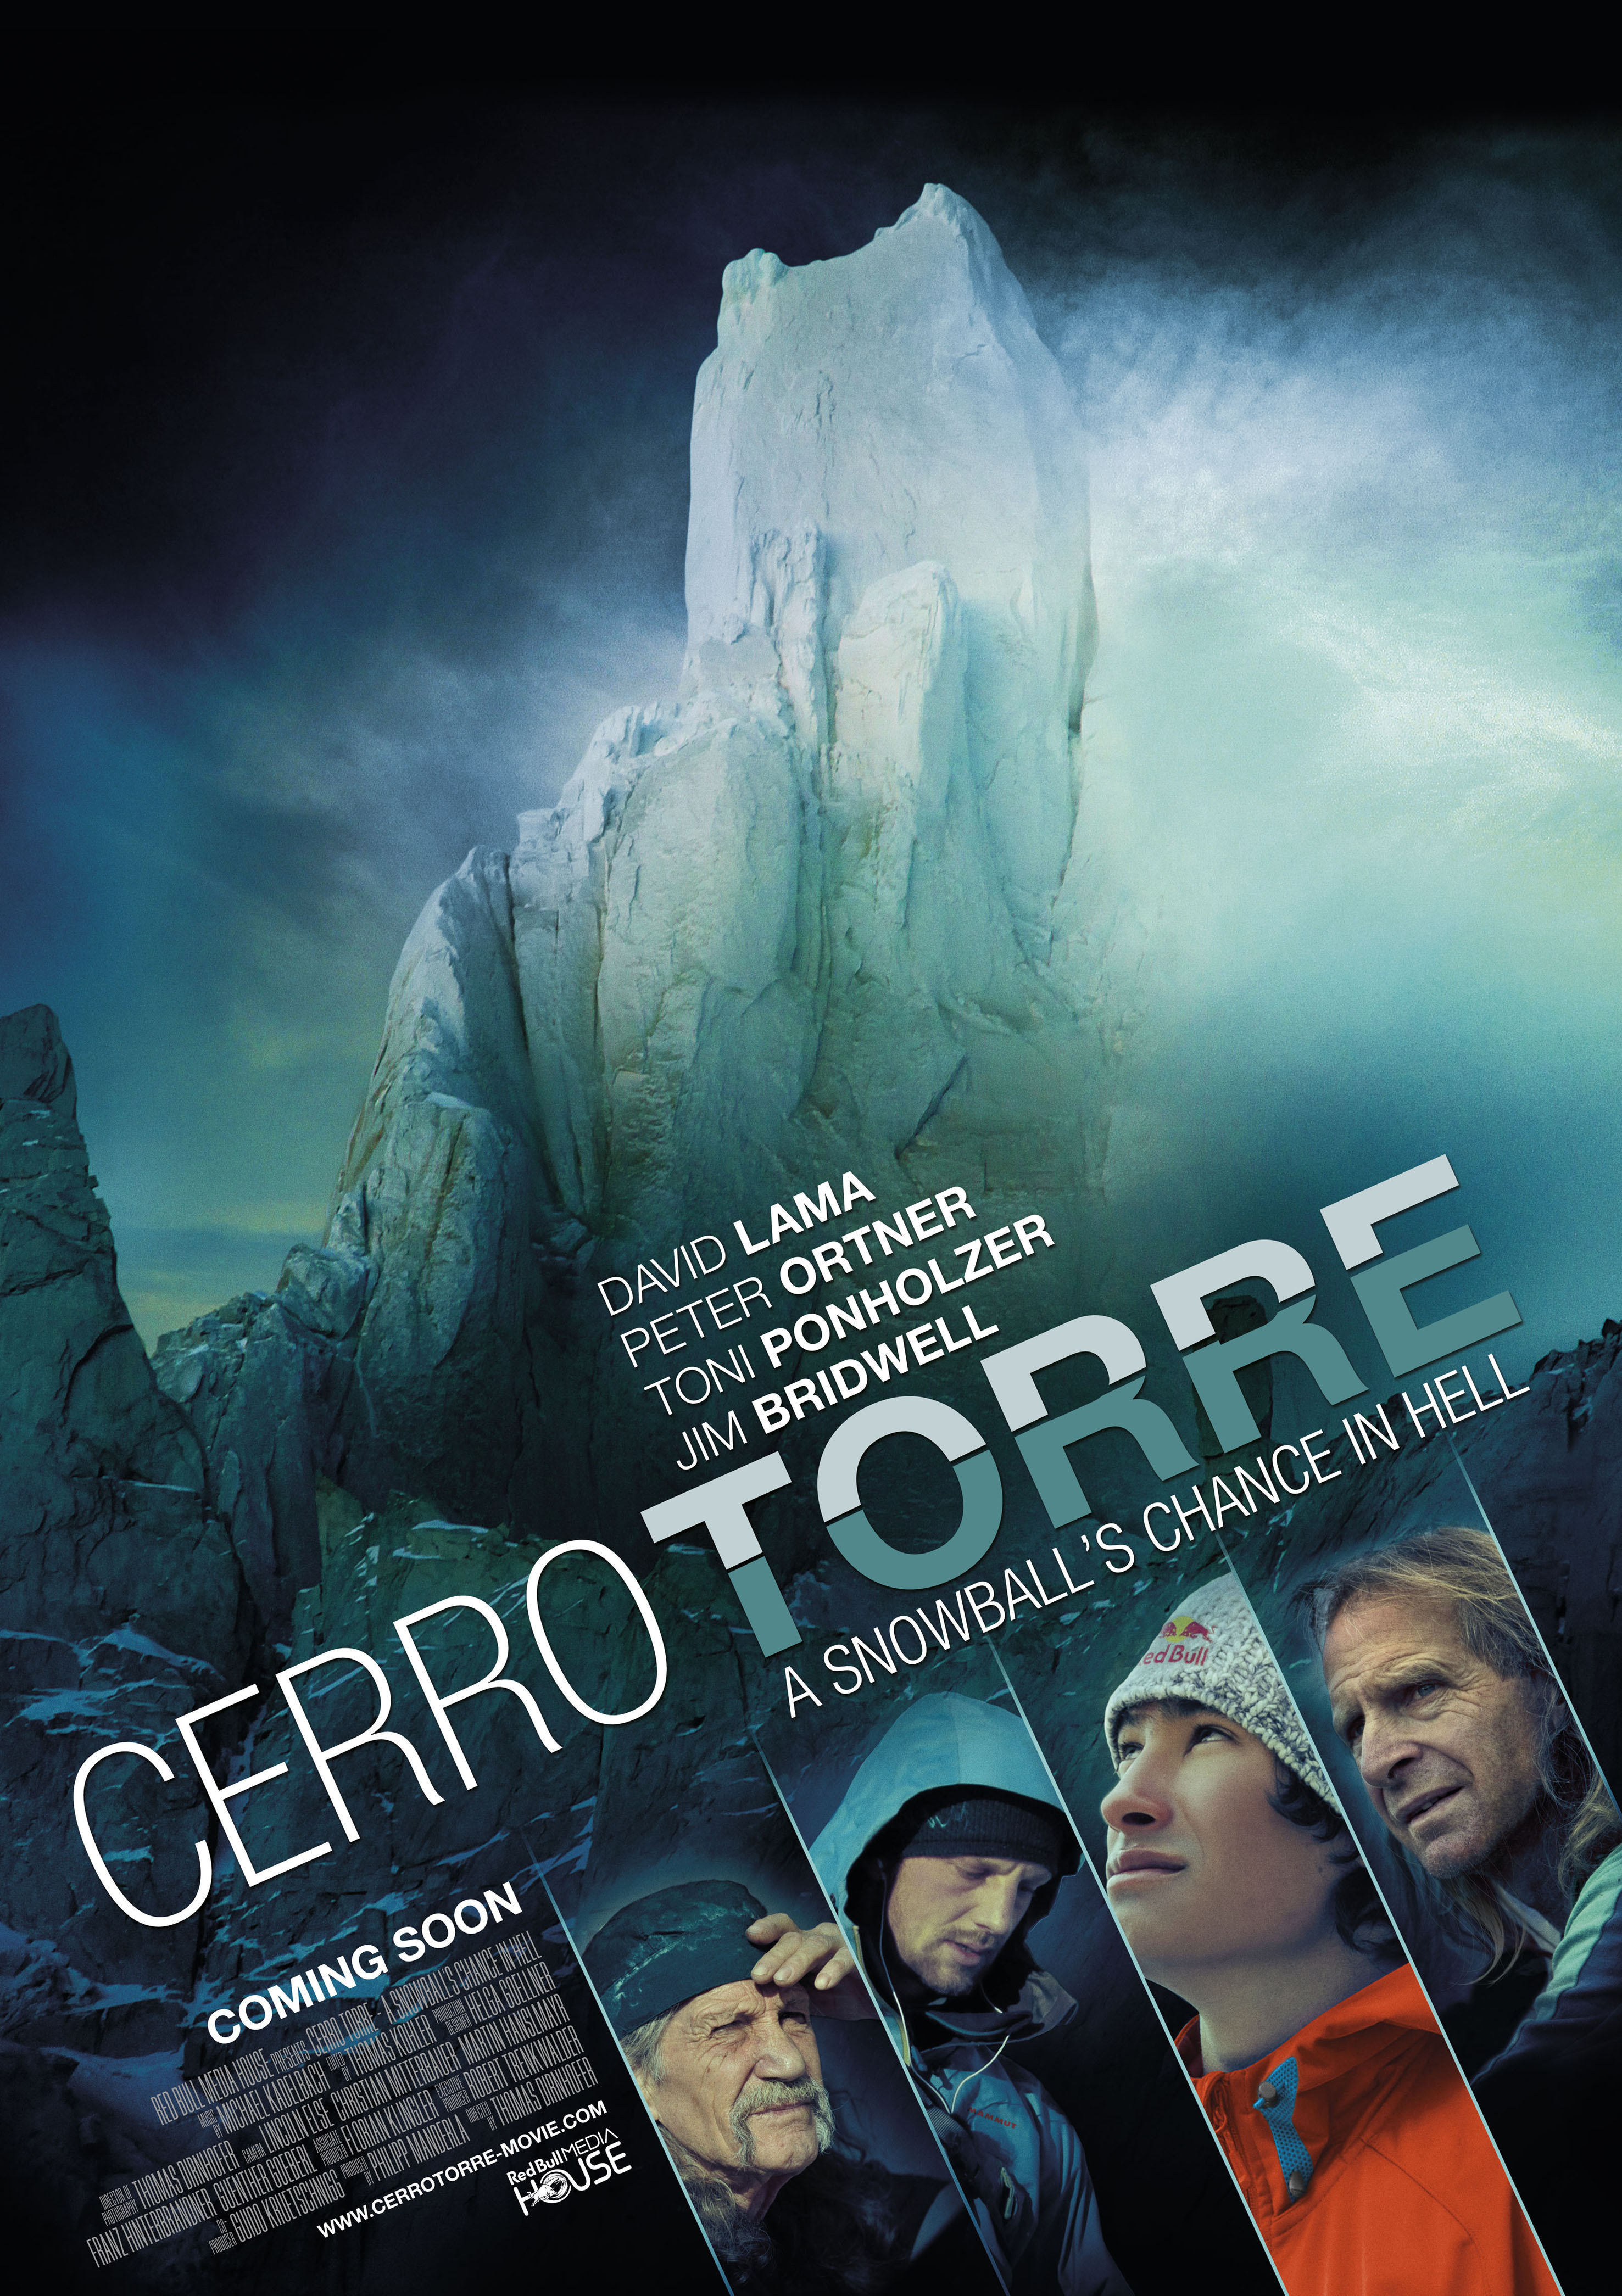 5.Cerro_Torre_Snowballs_Chance_in_Hell